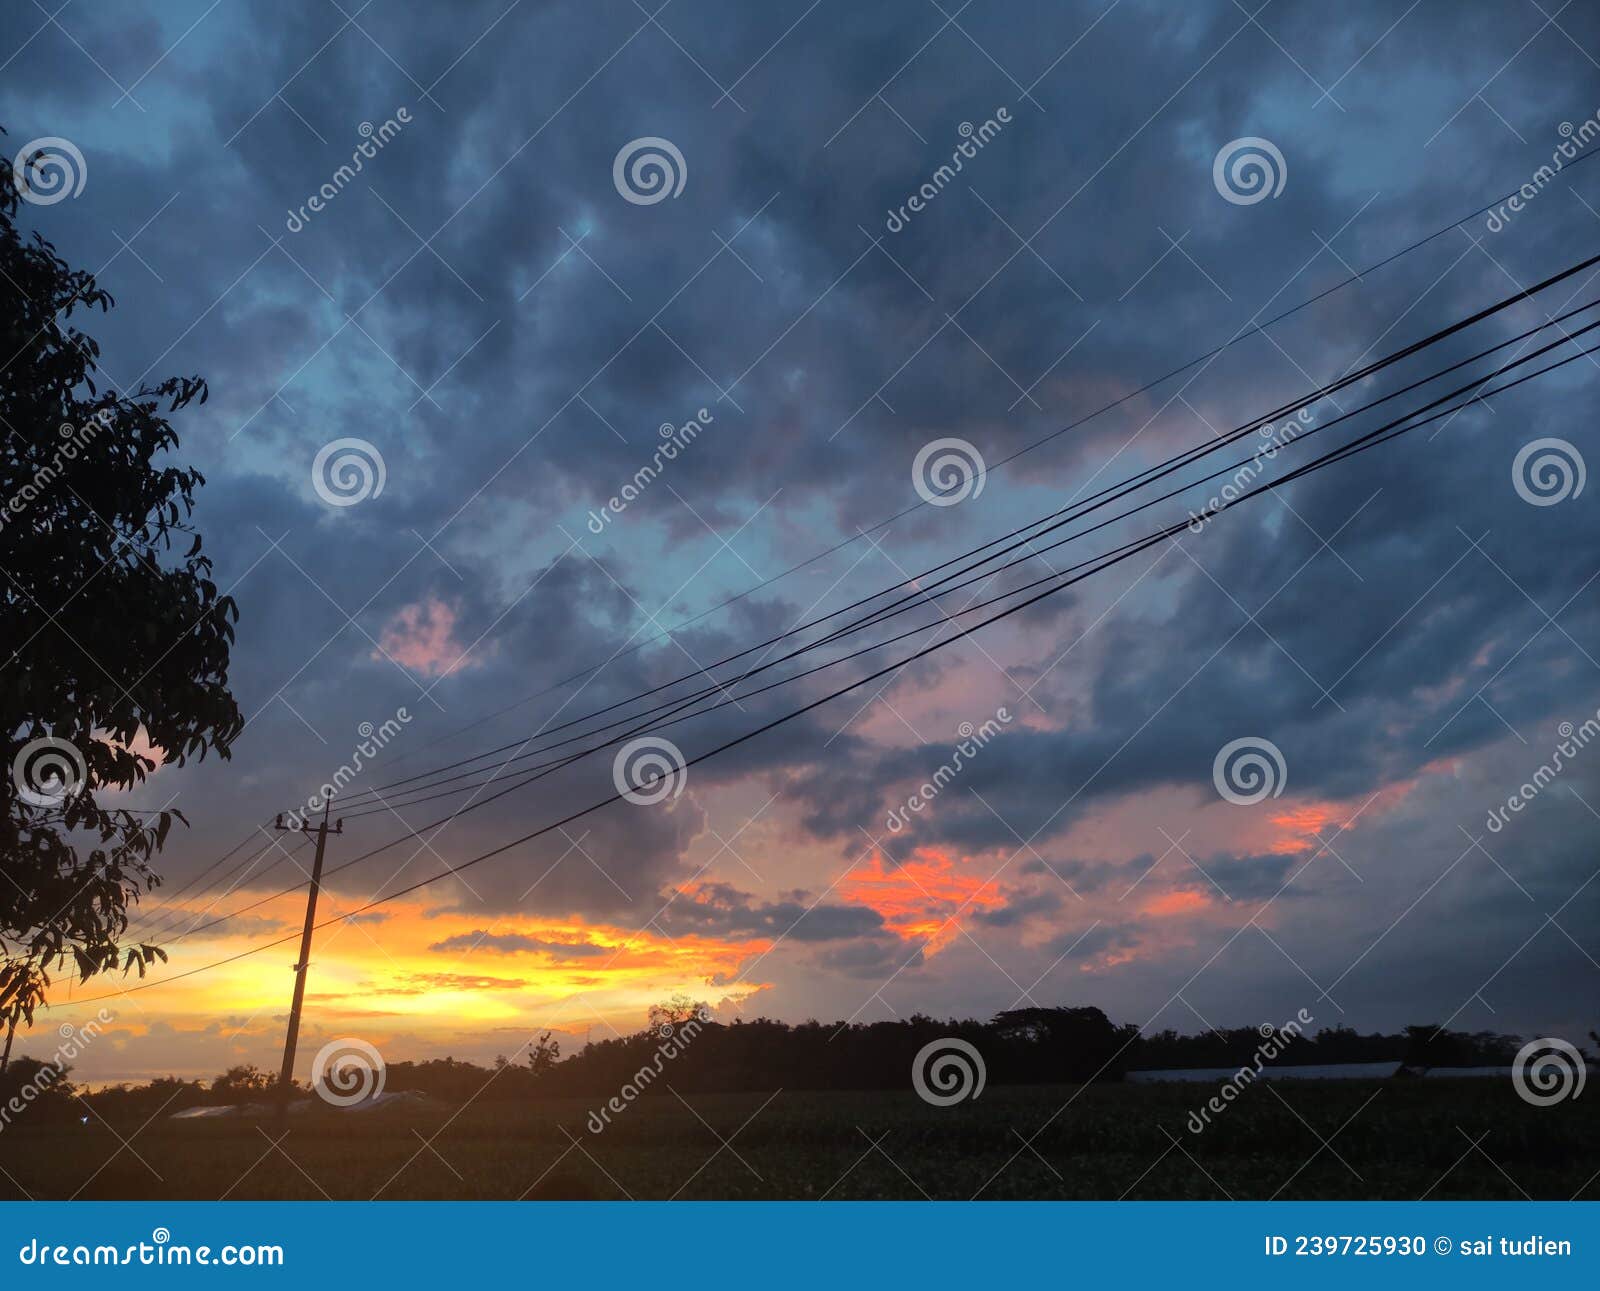 fotos sunset in sky village